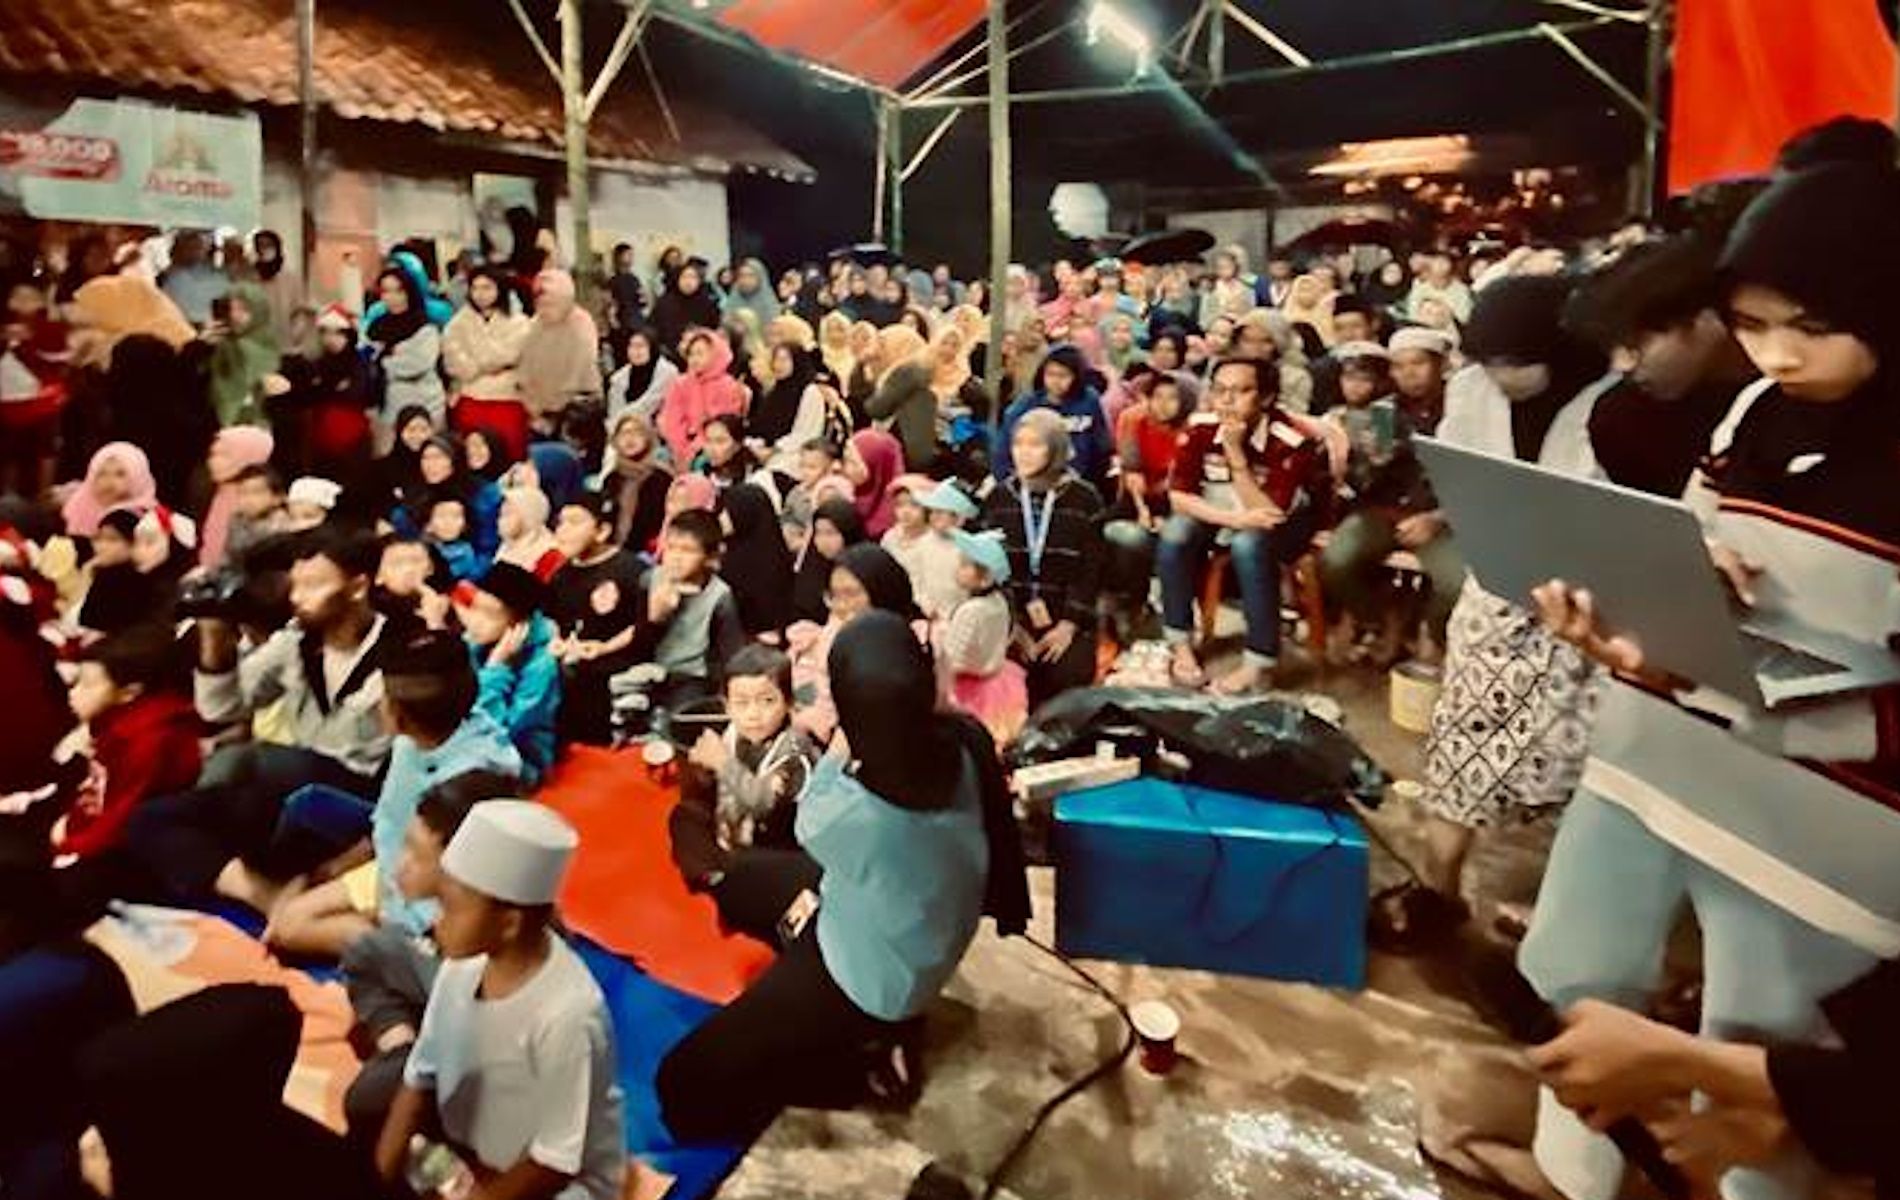 BEM Fakultas Ilmu Sosial Universitas Negeri Jakarta melaksanakan pengabdian masyarakat melalui kegiatan Gerakan FIS Mengabdi selama 8 hari di Kampung Cianten, Desa Purasari, Kecamatan Leuwiliang, Bogor, Jawa Barat.